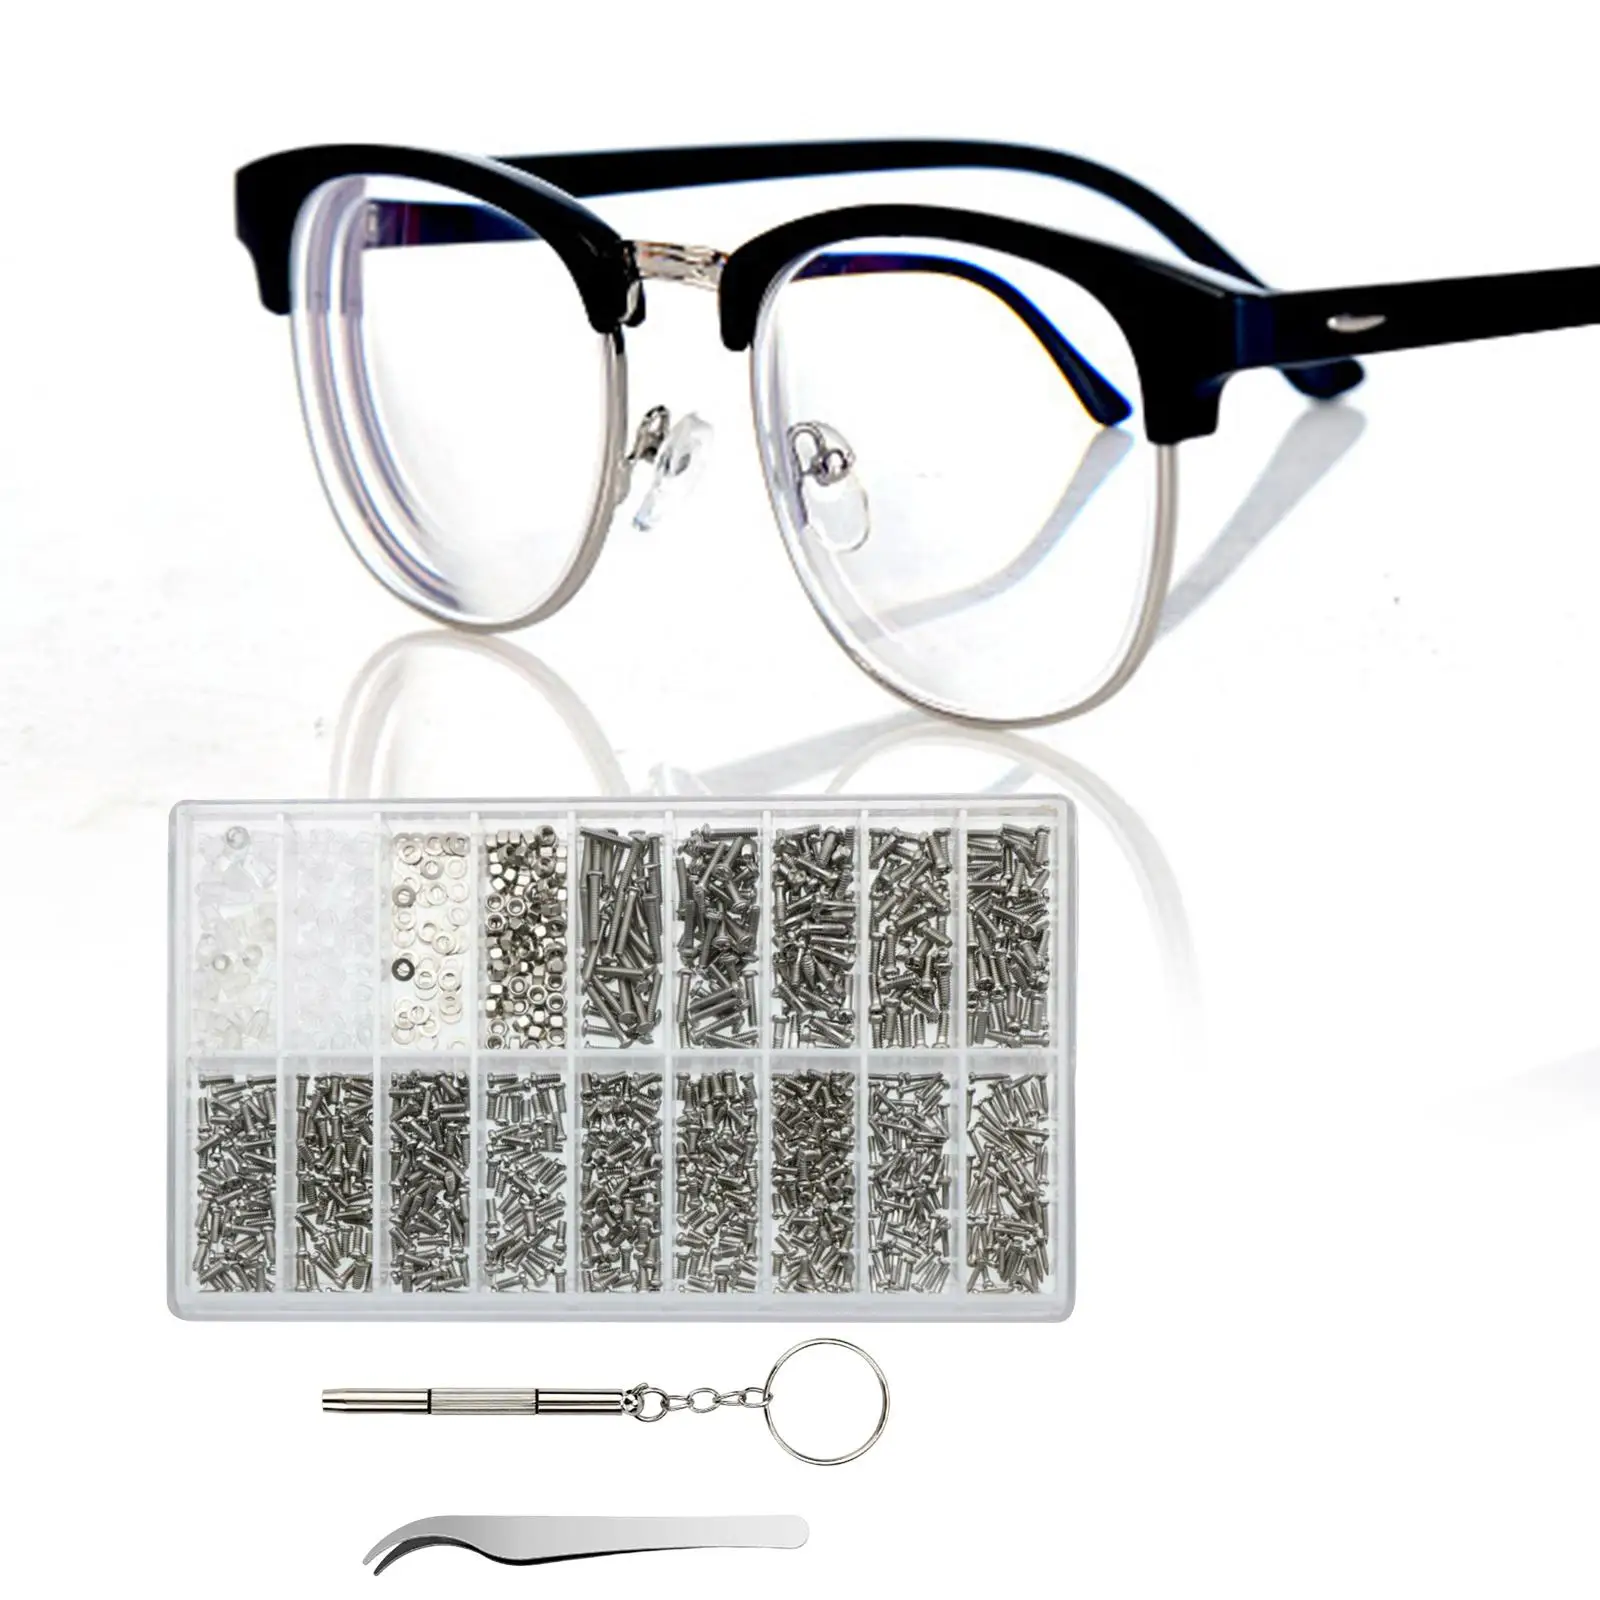 Complete Eyeglass Repair Kits Nose Pads Compact Screw Box Eye Glasses Repairing Kit for Spectacles Watch Clock Jewelry Repair